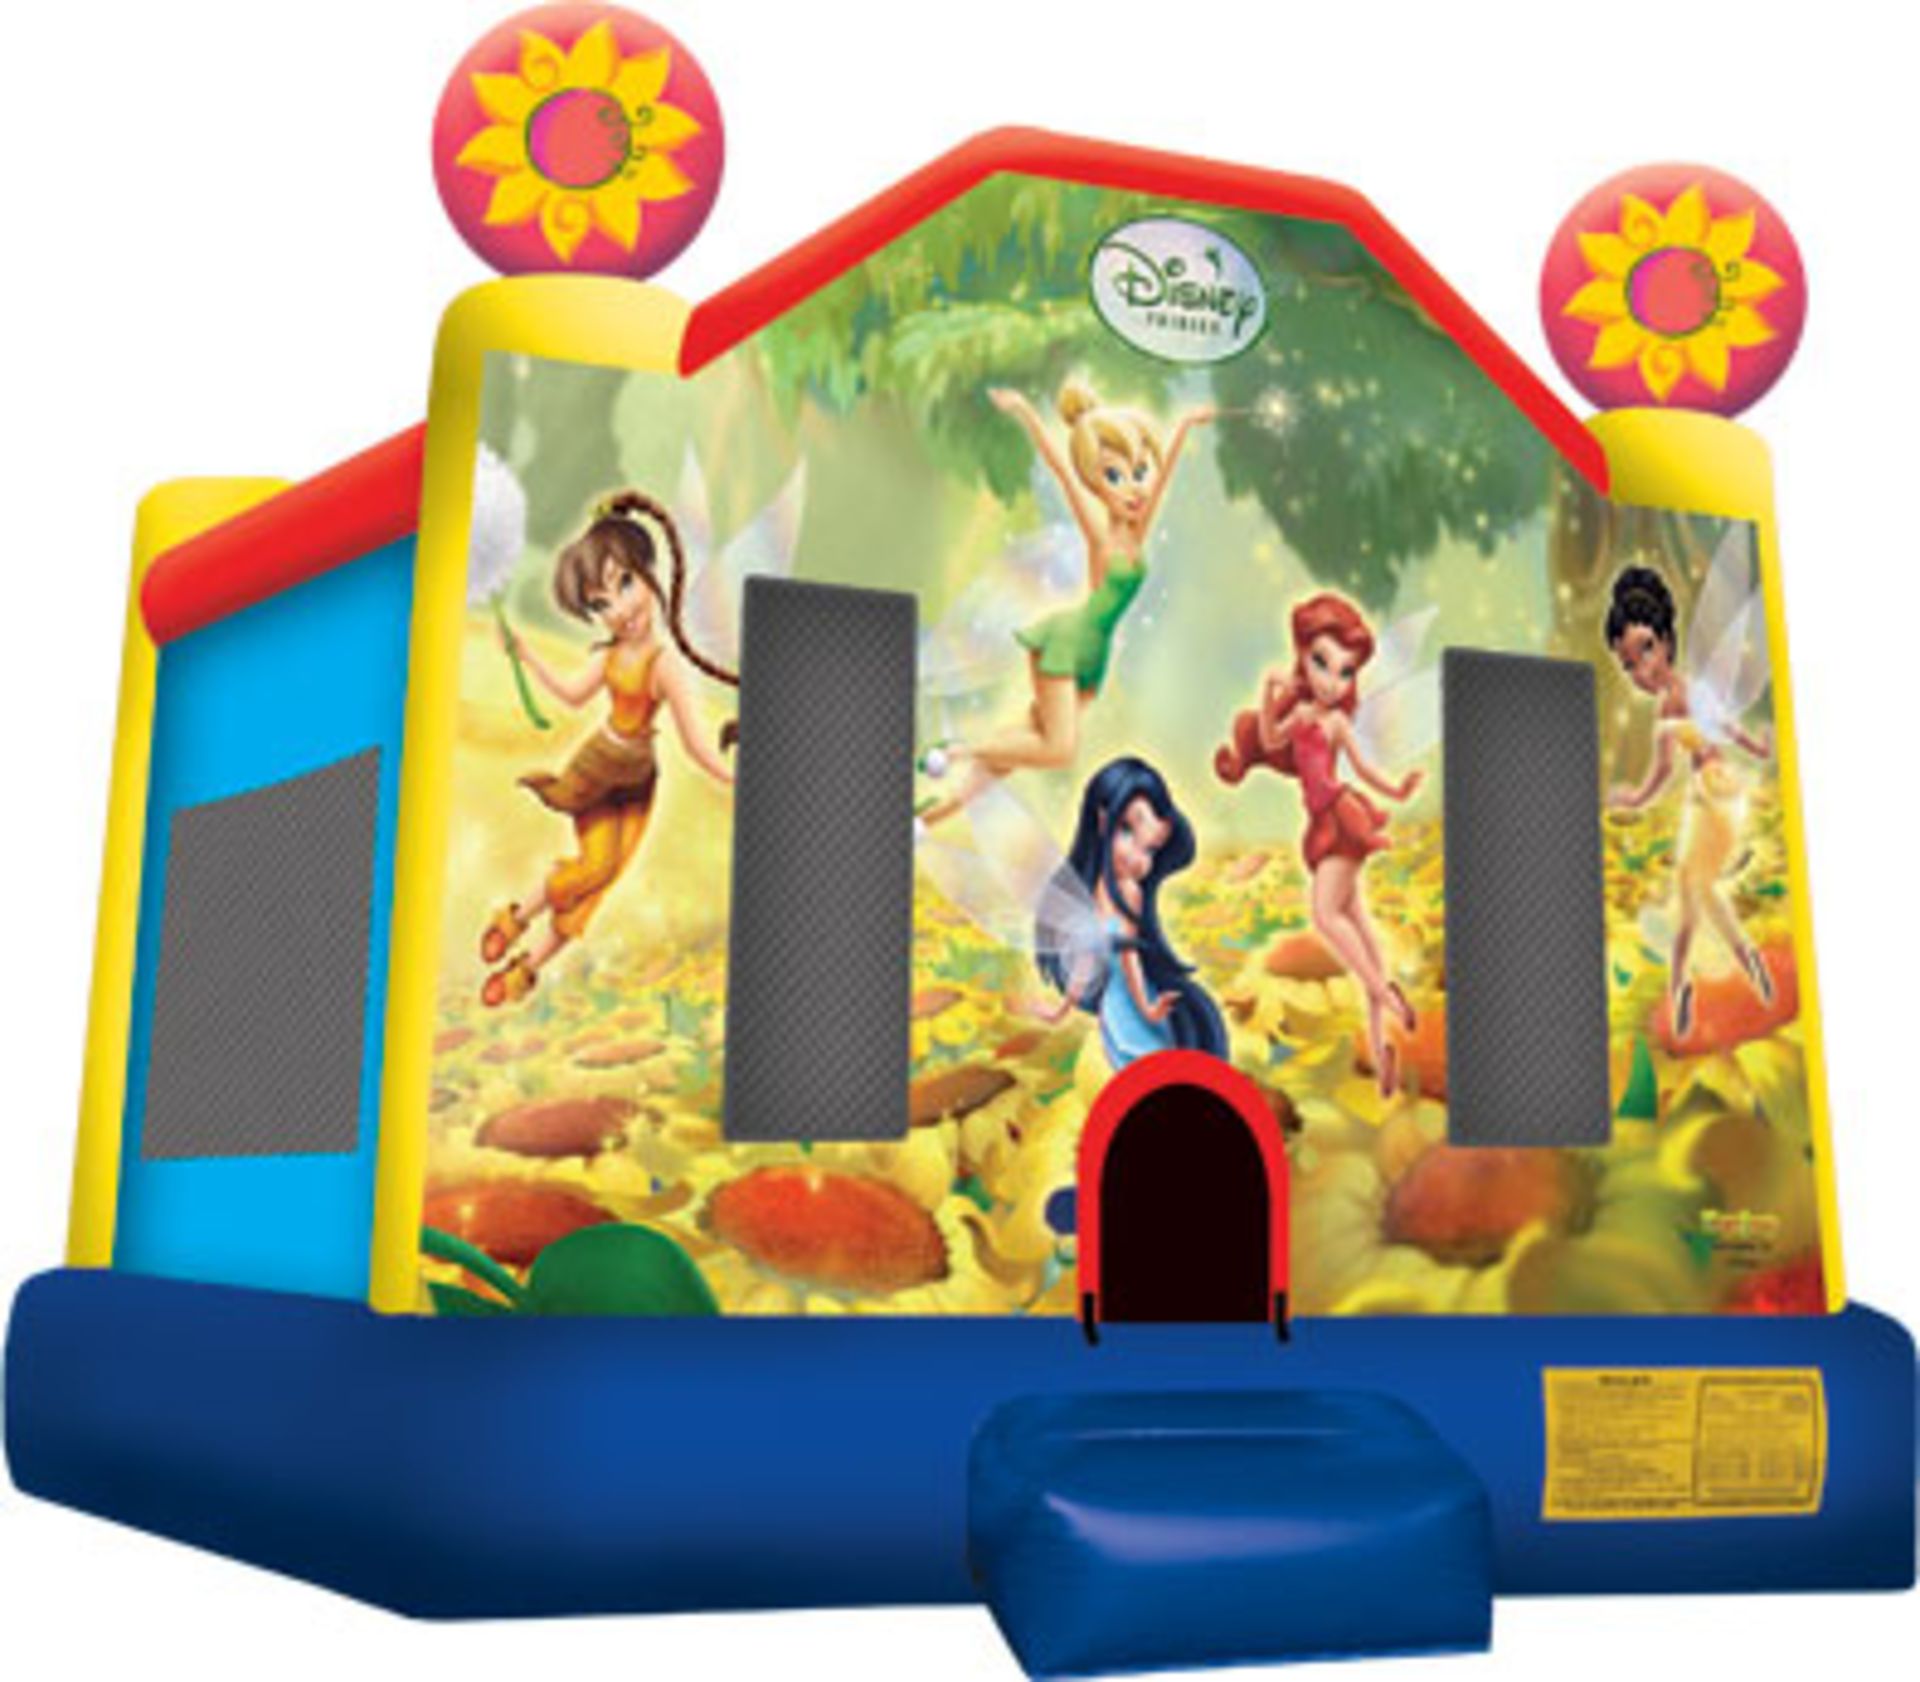 Disney Fairies Jumper, 14' x 13' x 12' - Image 2 of 2